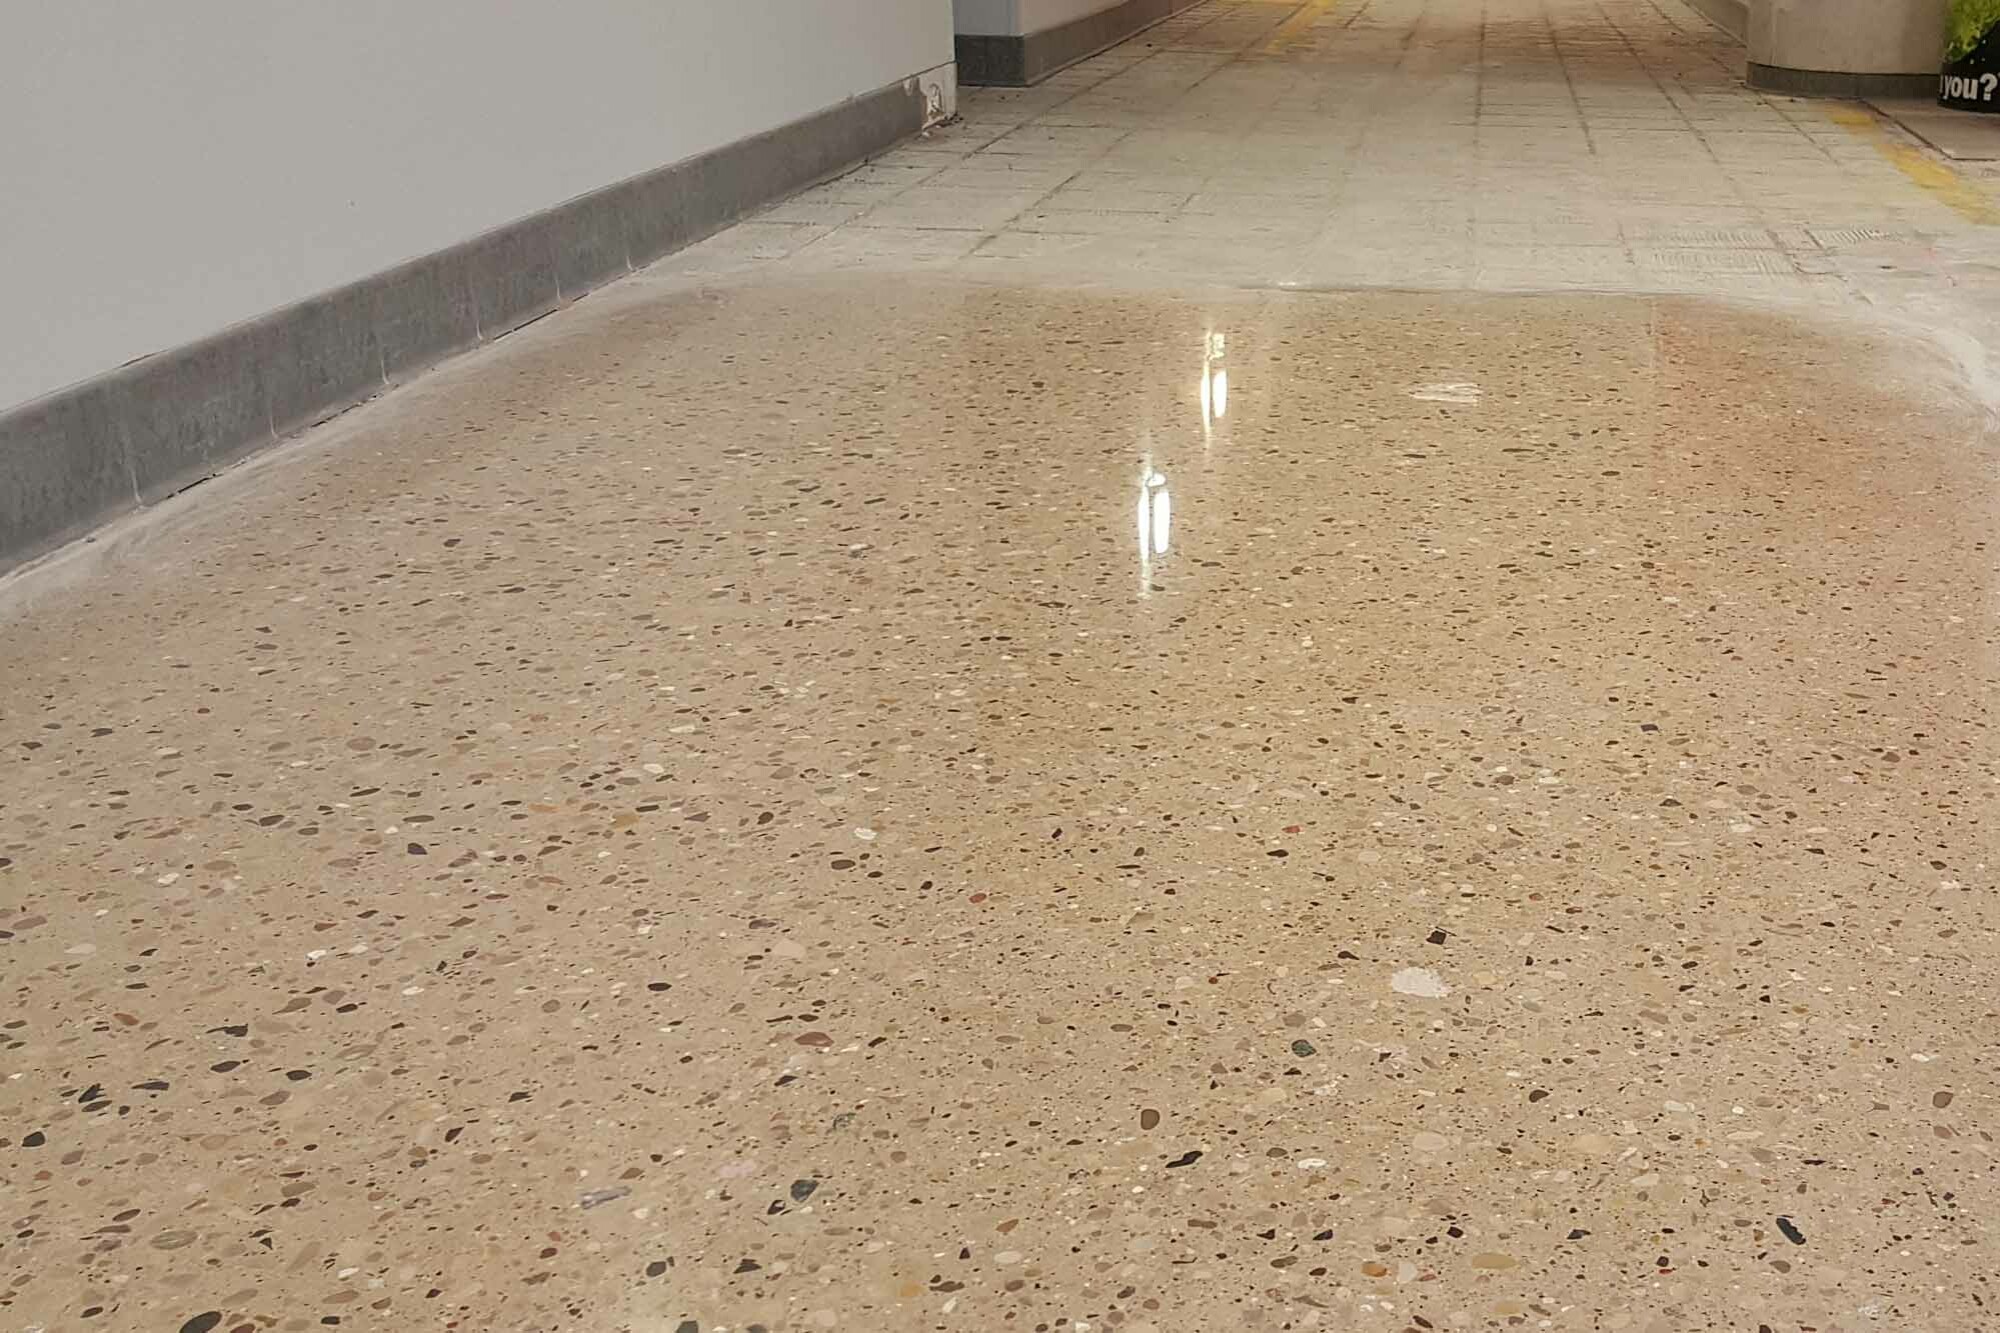 Polished Concrete Floors